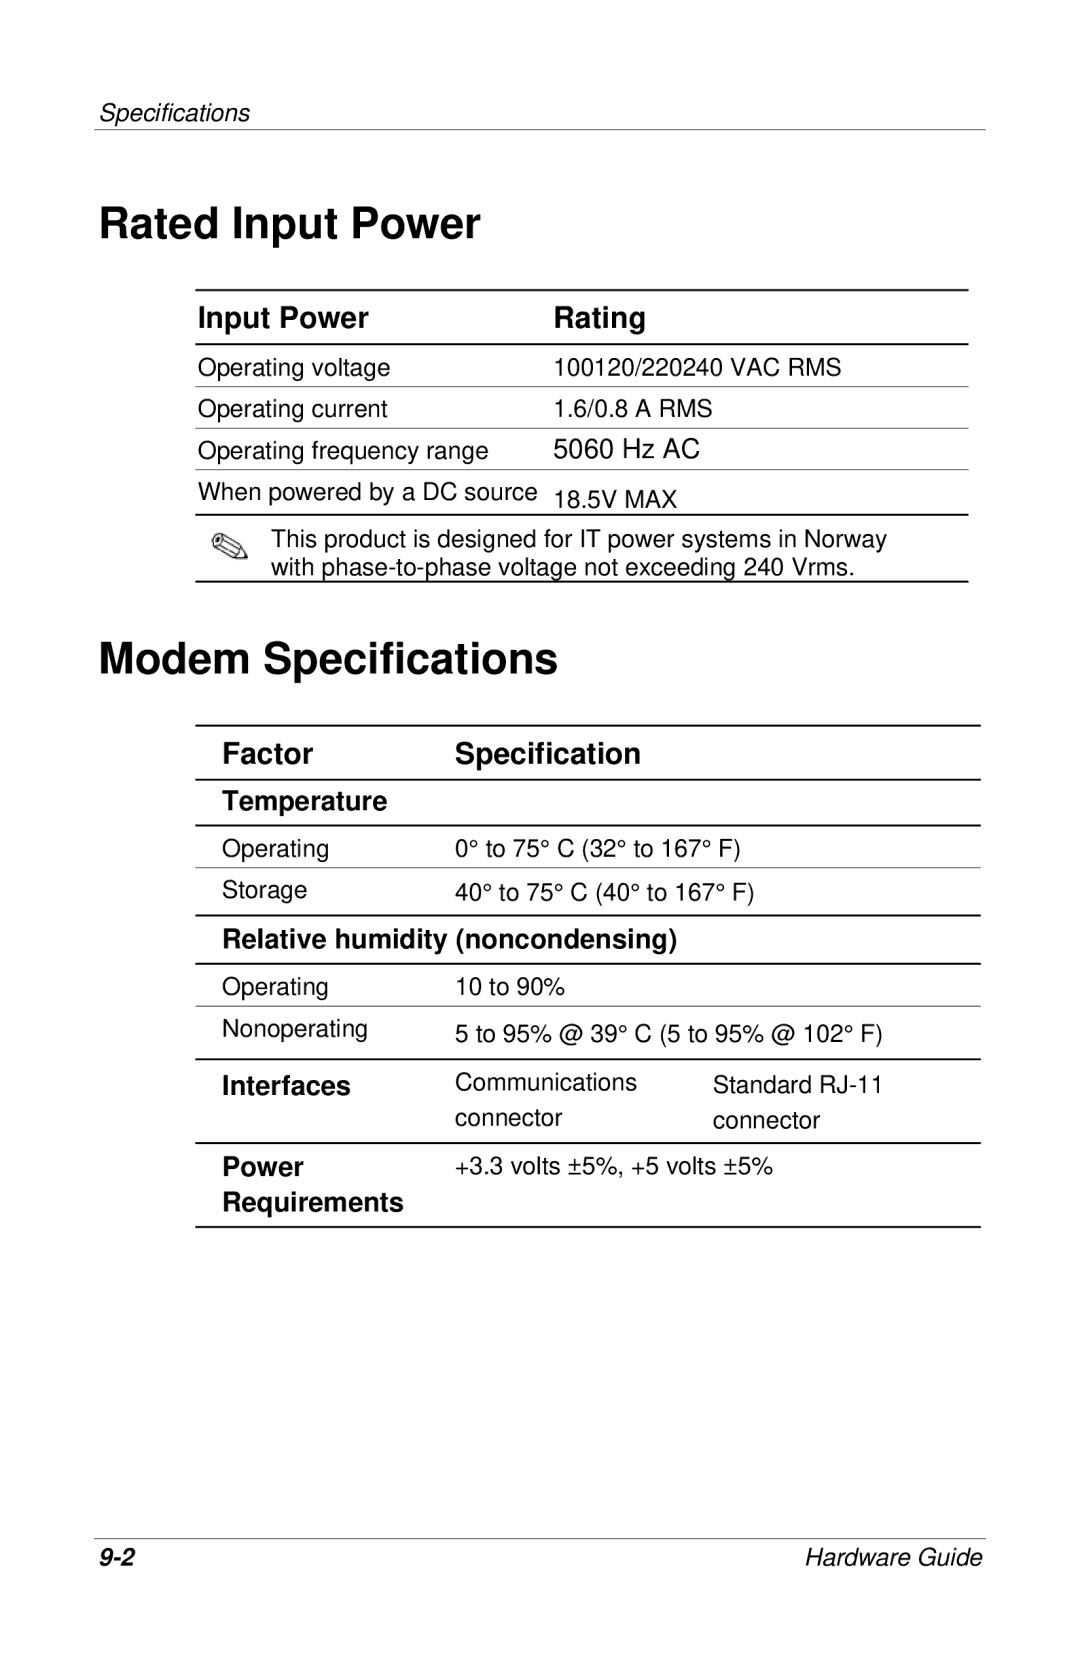 HP 309971-001 manual Rated Input Power, Modem Specifications, Input Power Rating, Factor Specification 